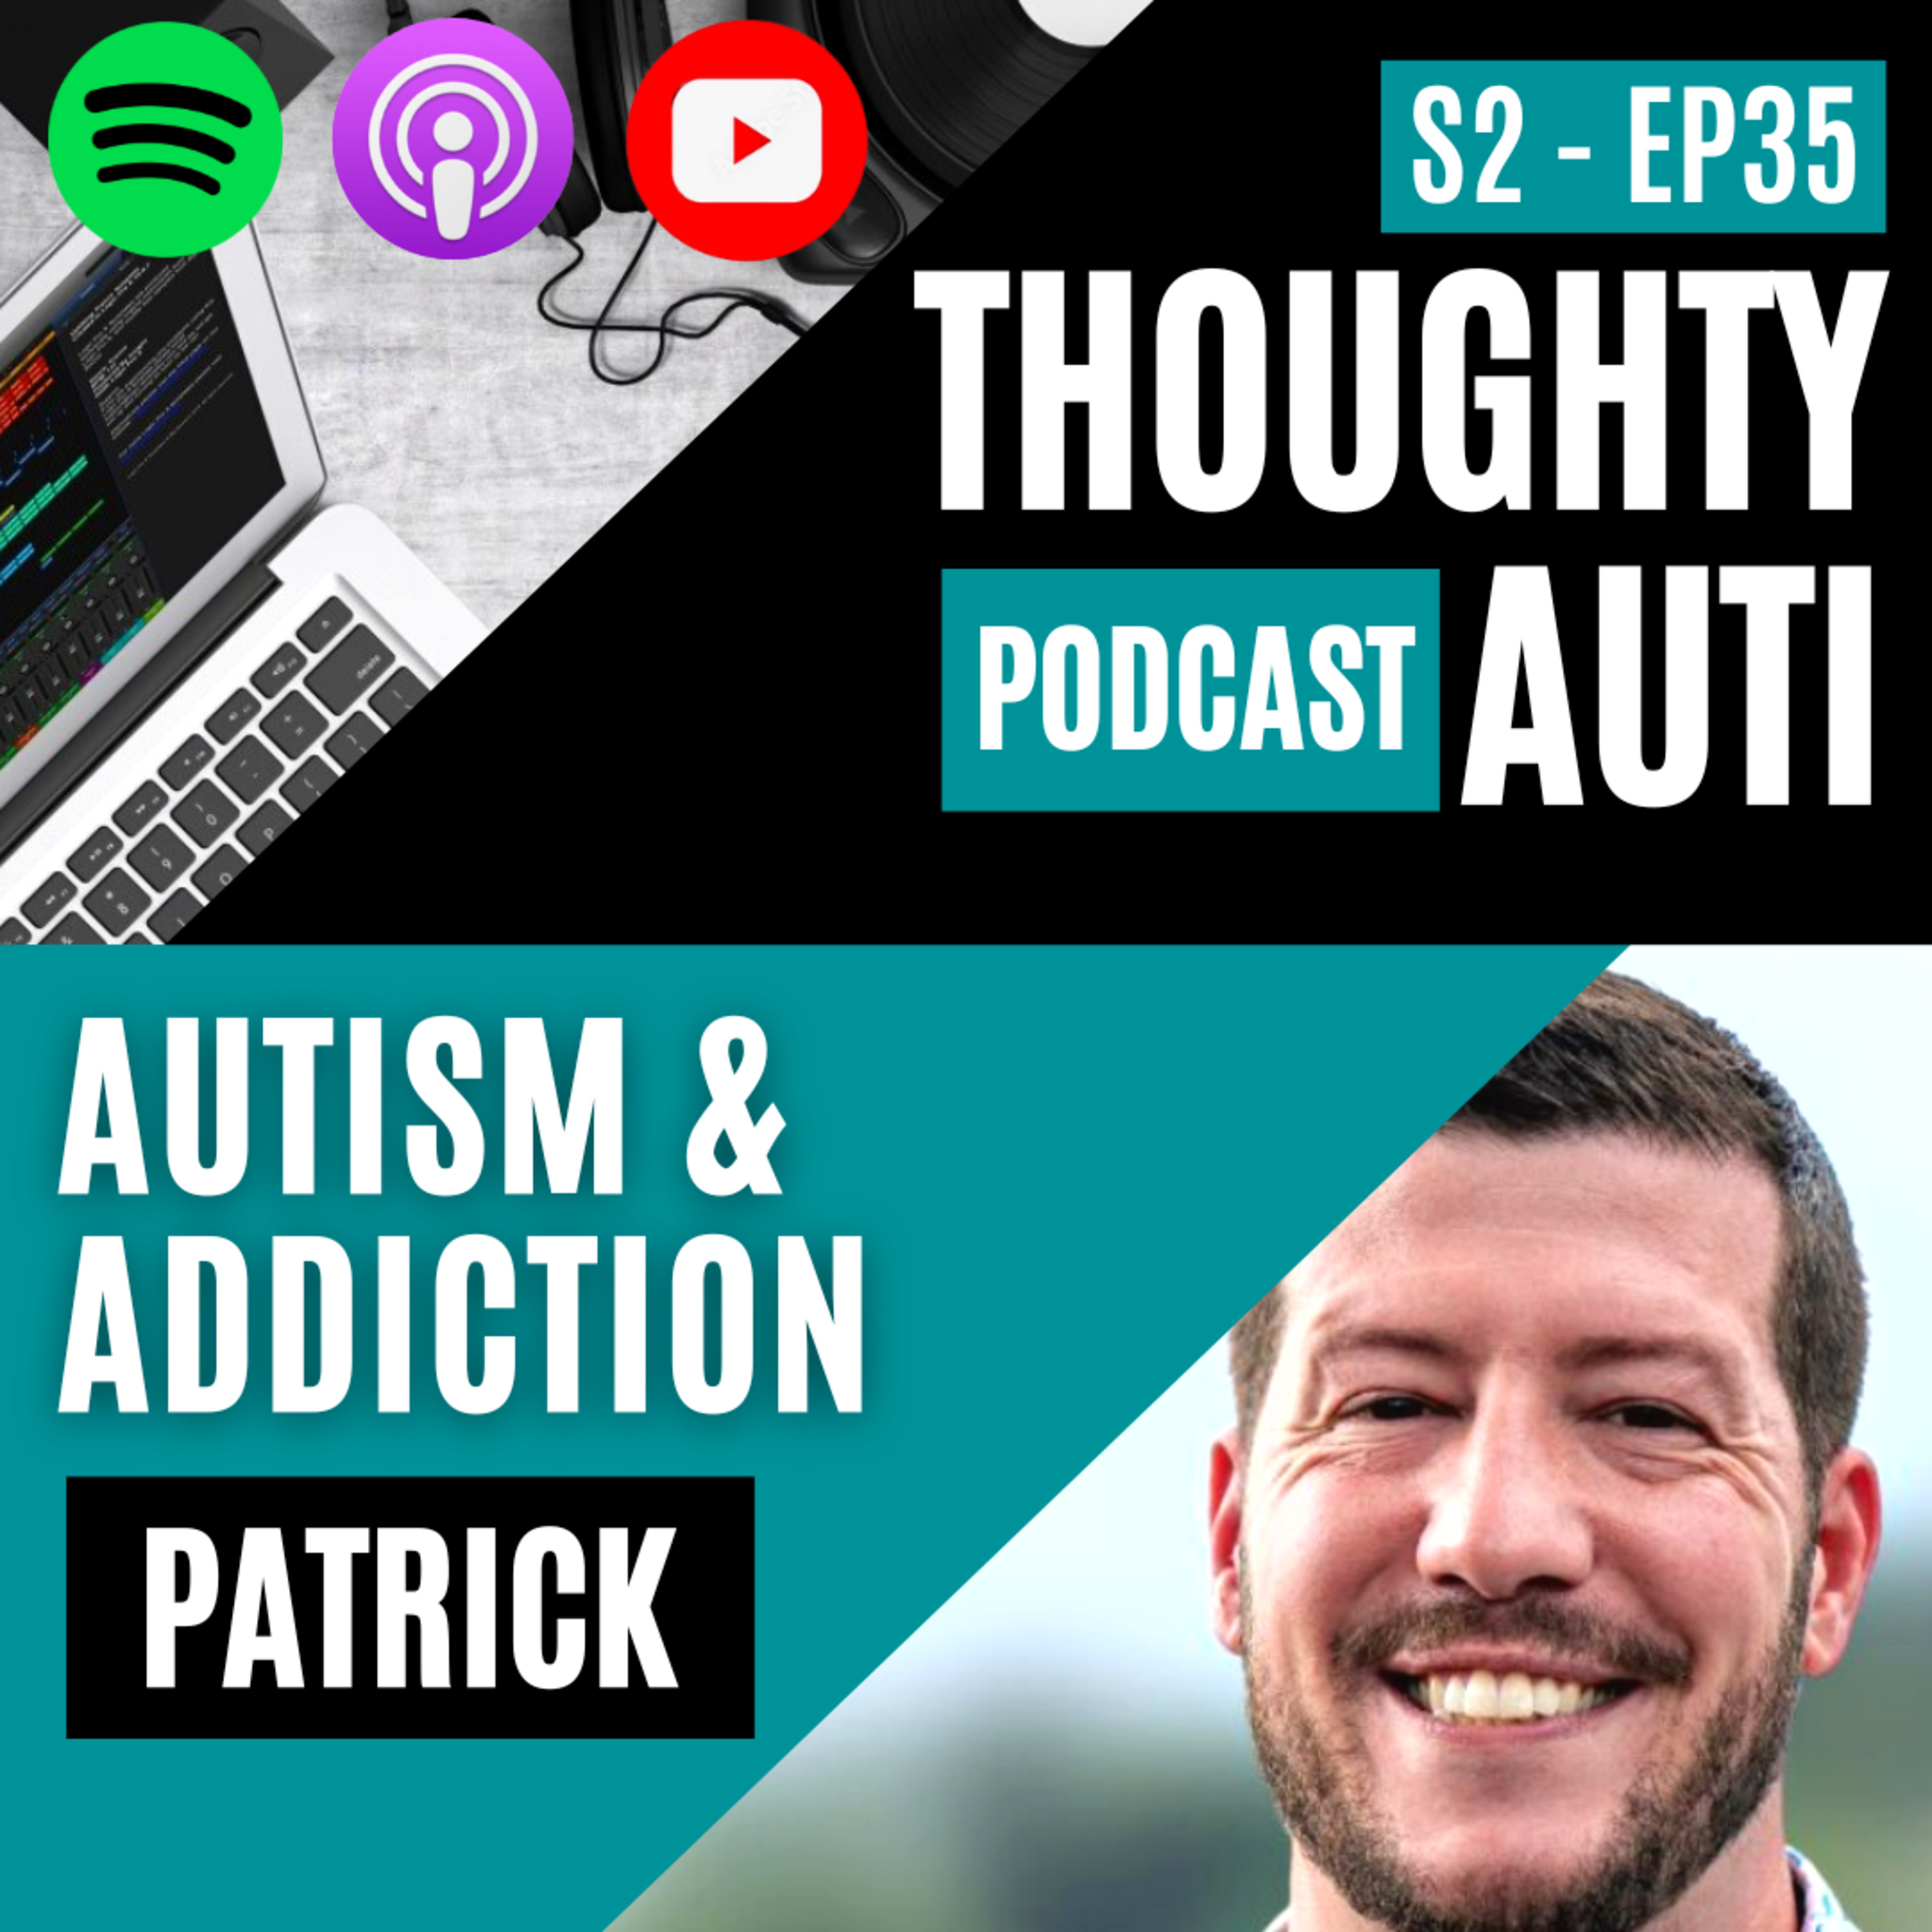 The Hidden Link Between Autism and Addiction